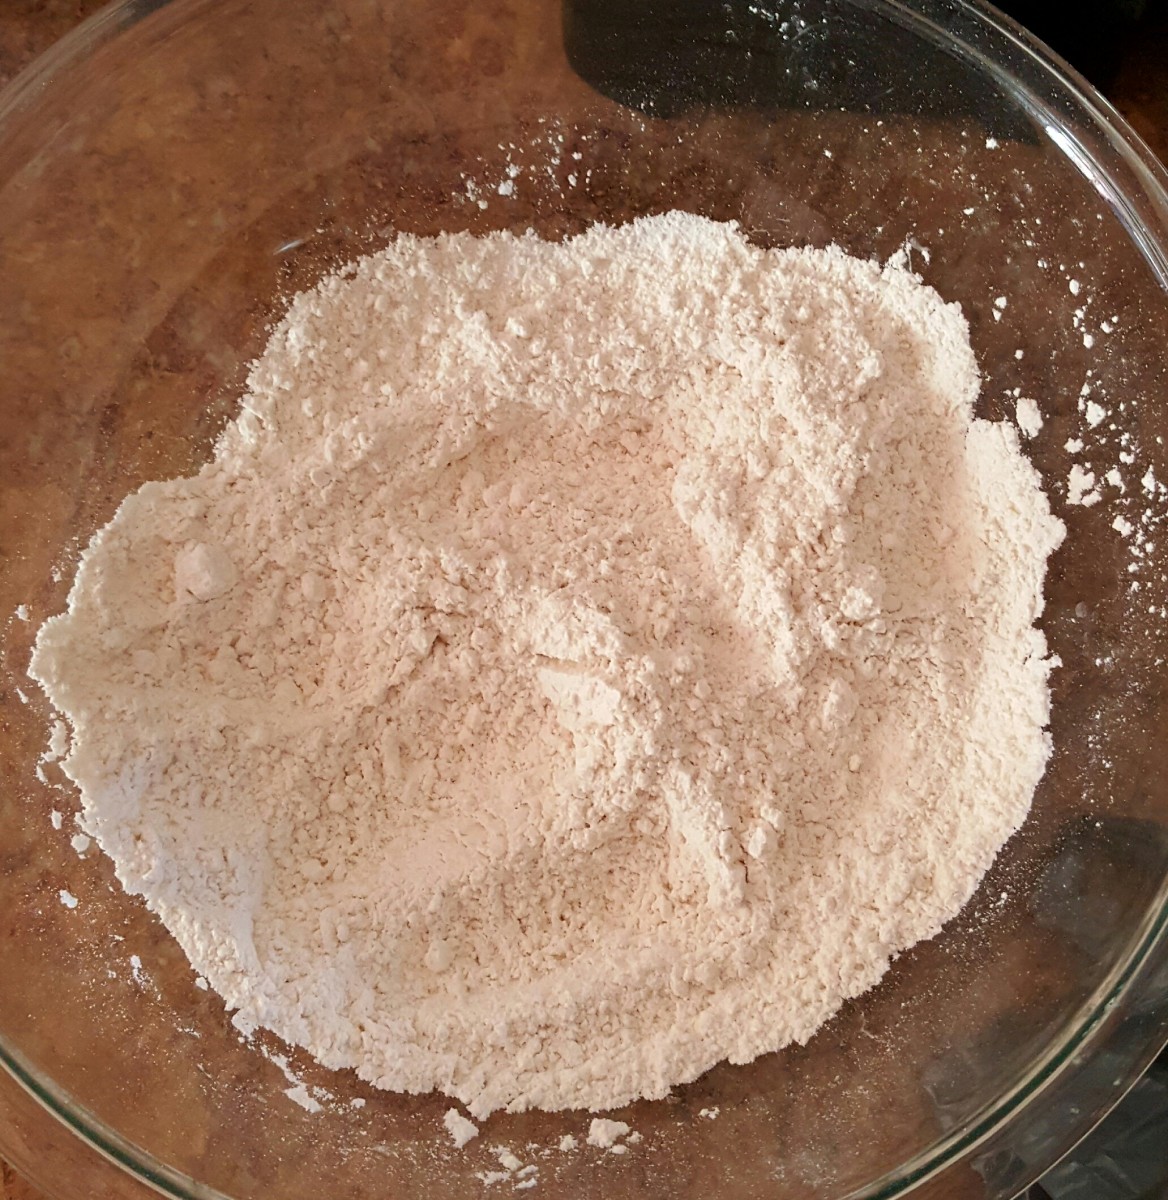 Combine flour, baking powder, and salt.